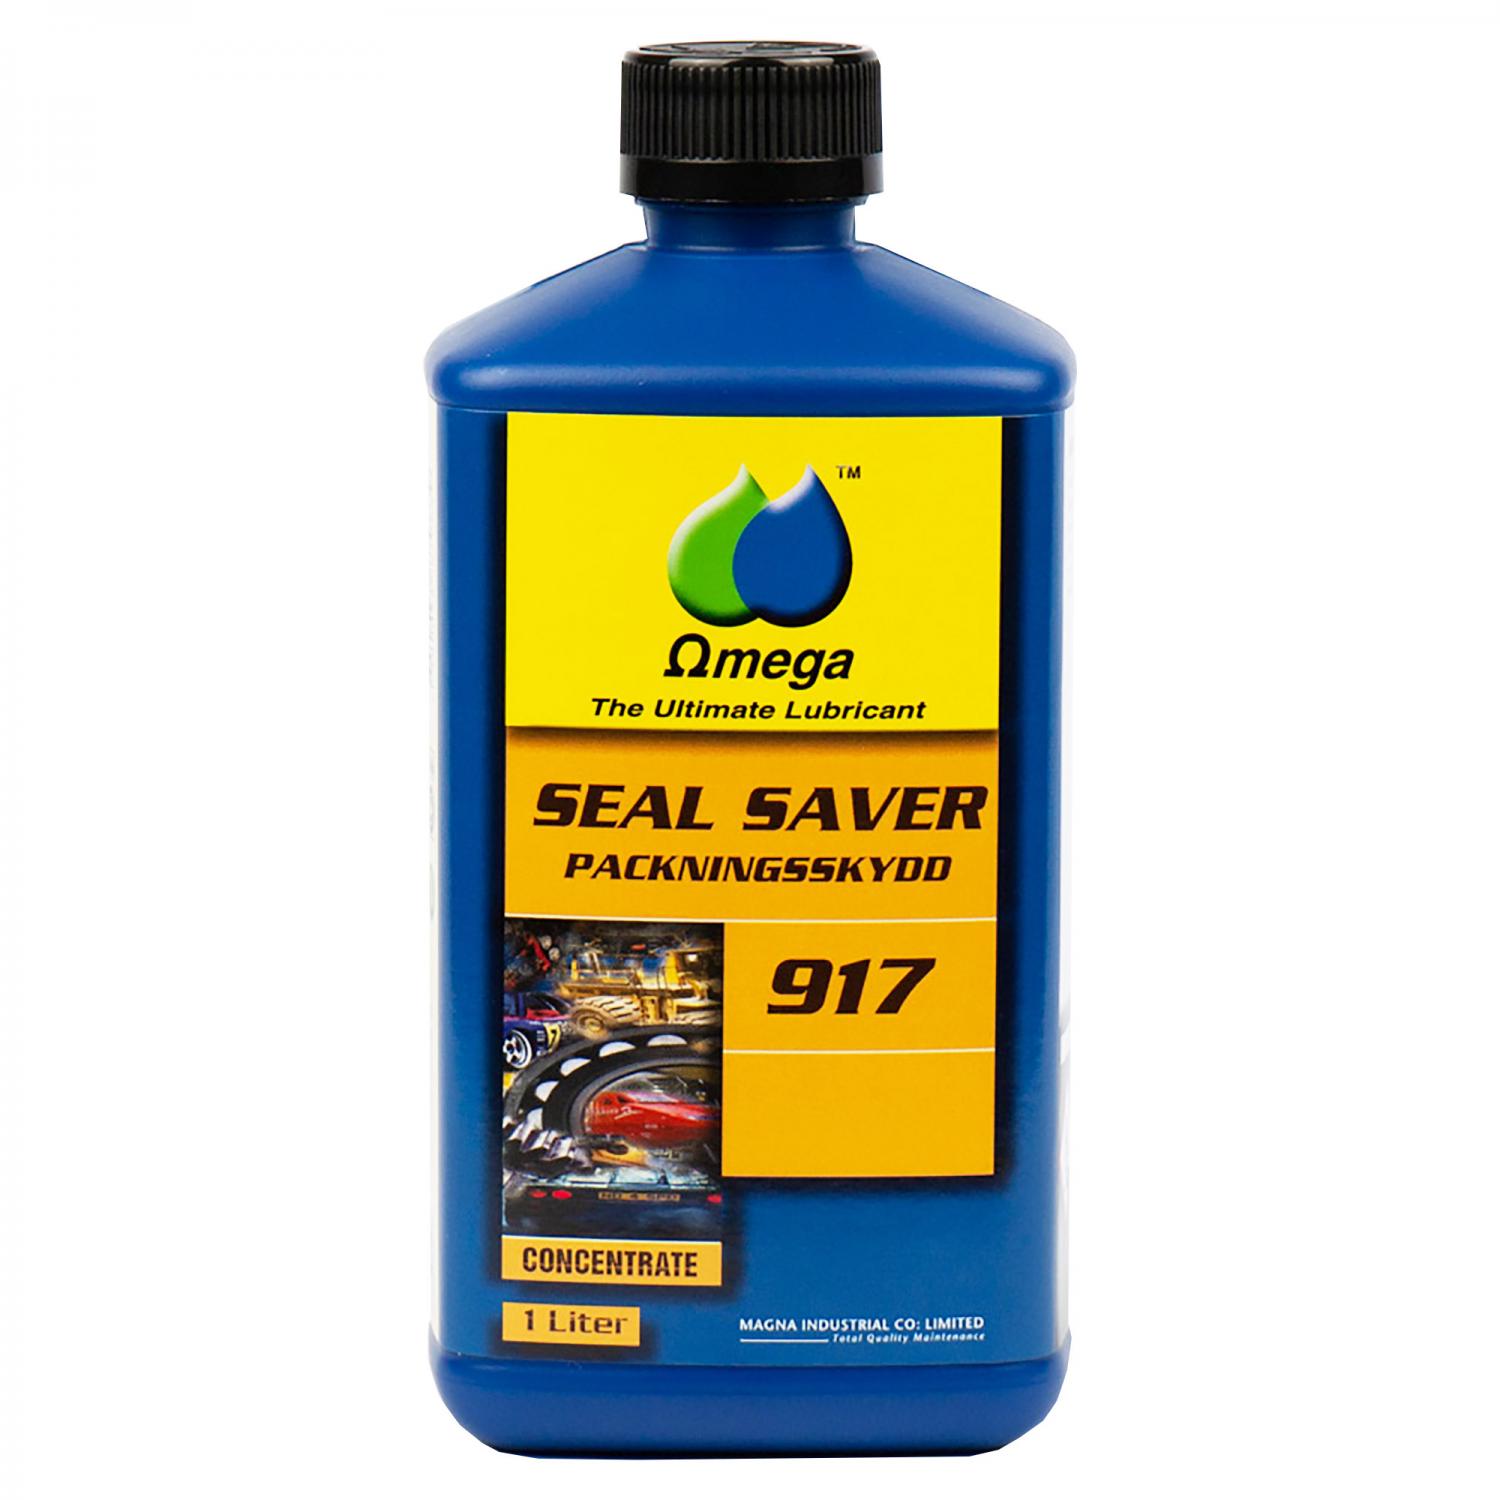 Omega 917 Oljelekkasjestopper, Pakningsfornyer 1 Liter